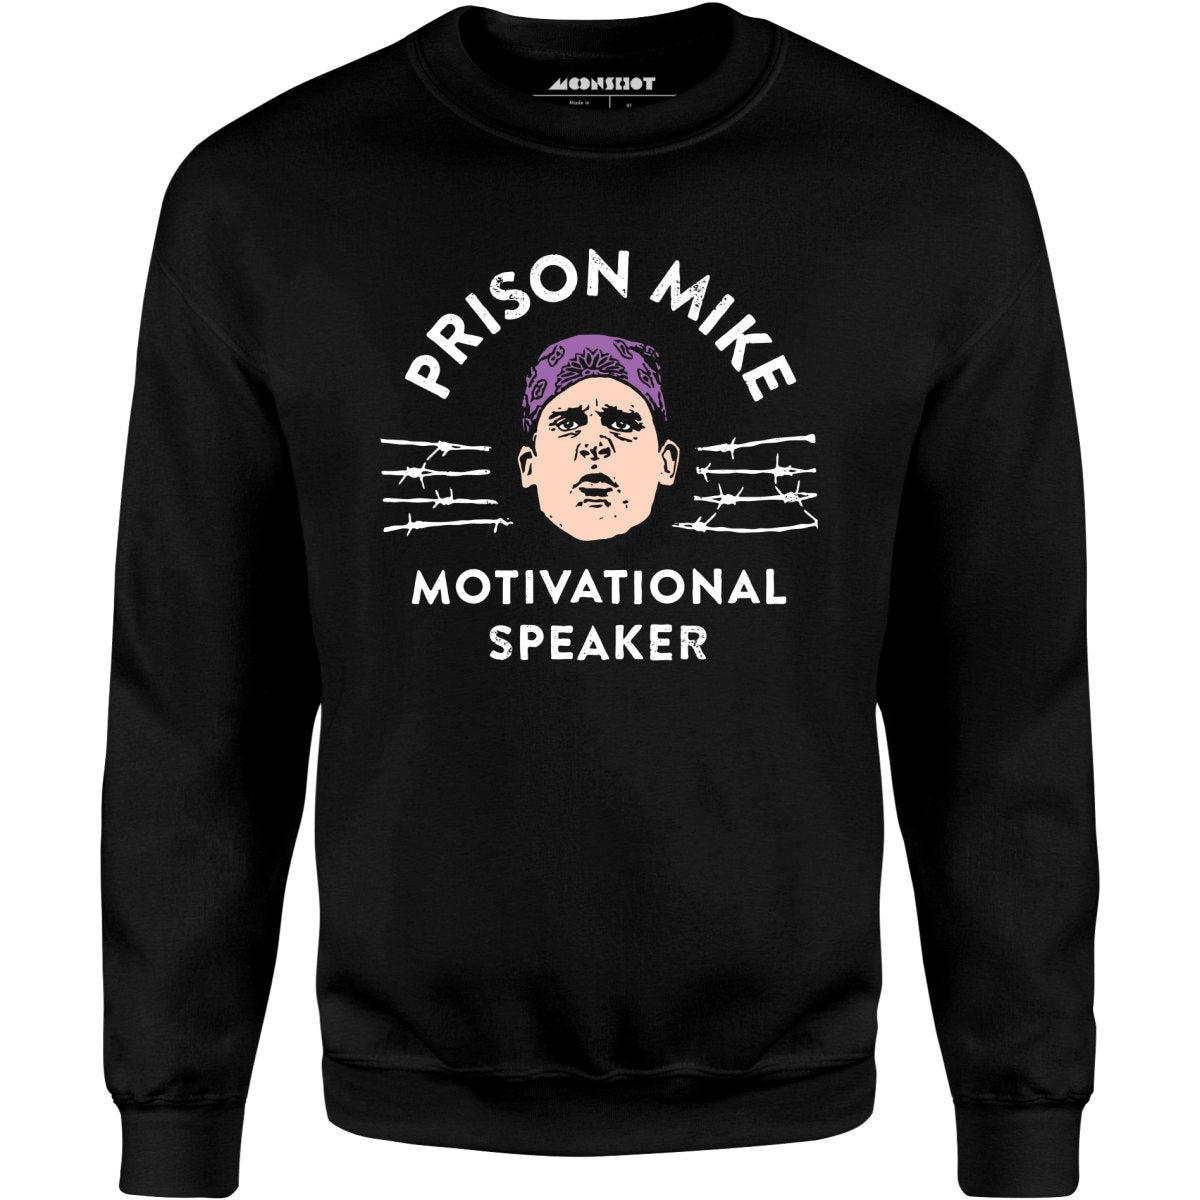 Prison Mike - Motivational Speaker - Unisex Sweatshirt